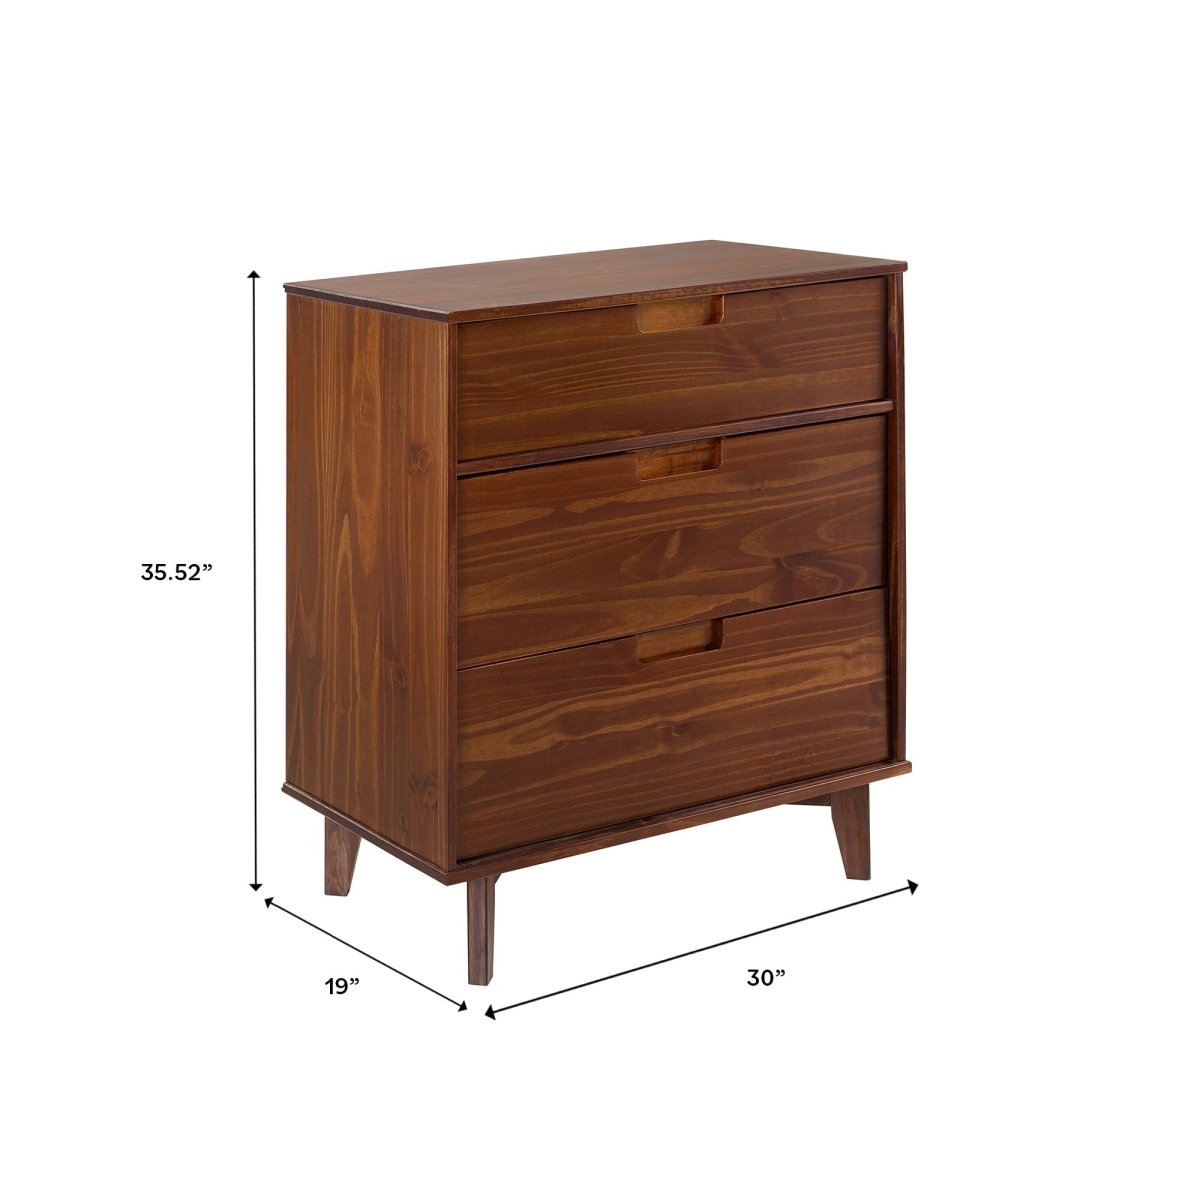 Walker Edison Sloane Mid Century Modern Solid Wood Dresser - lily & onyx